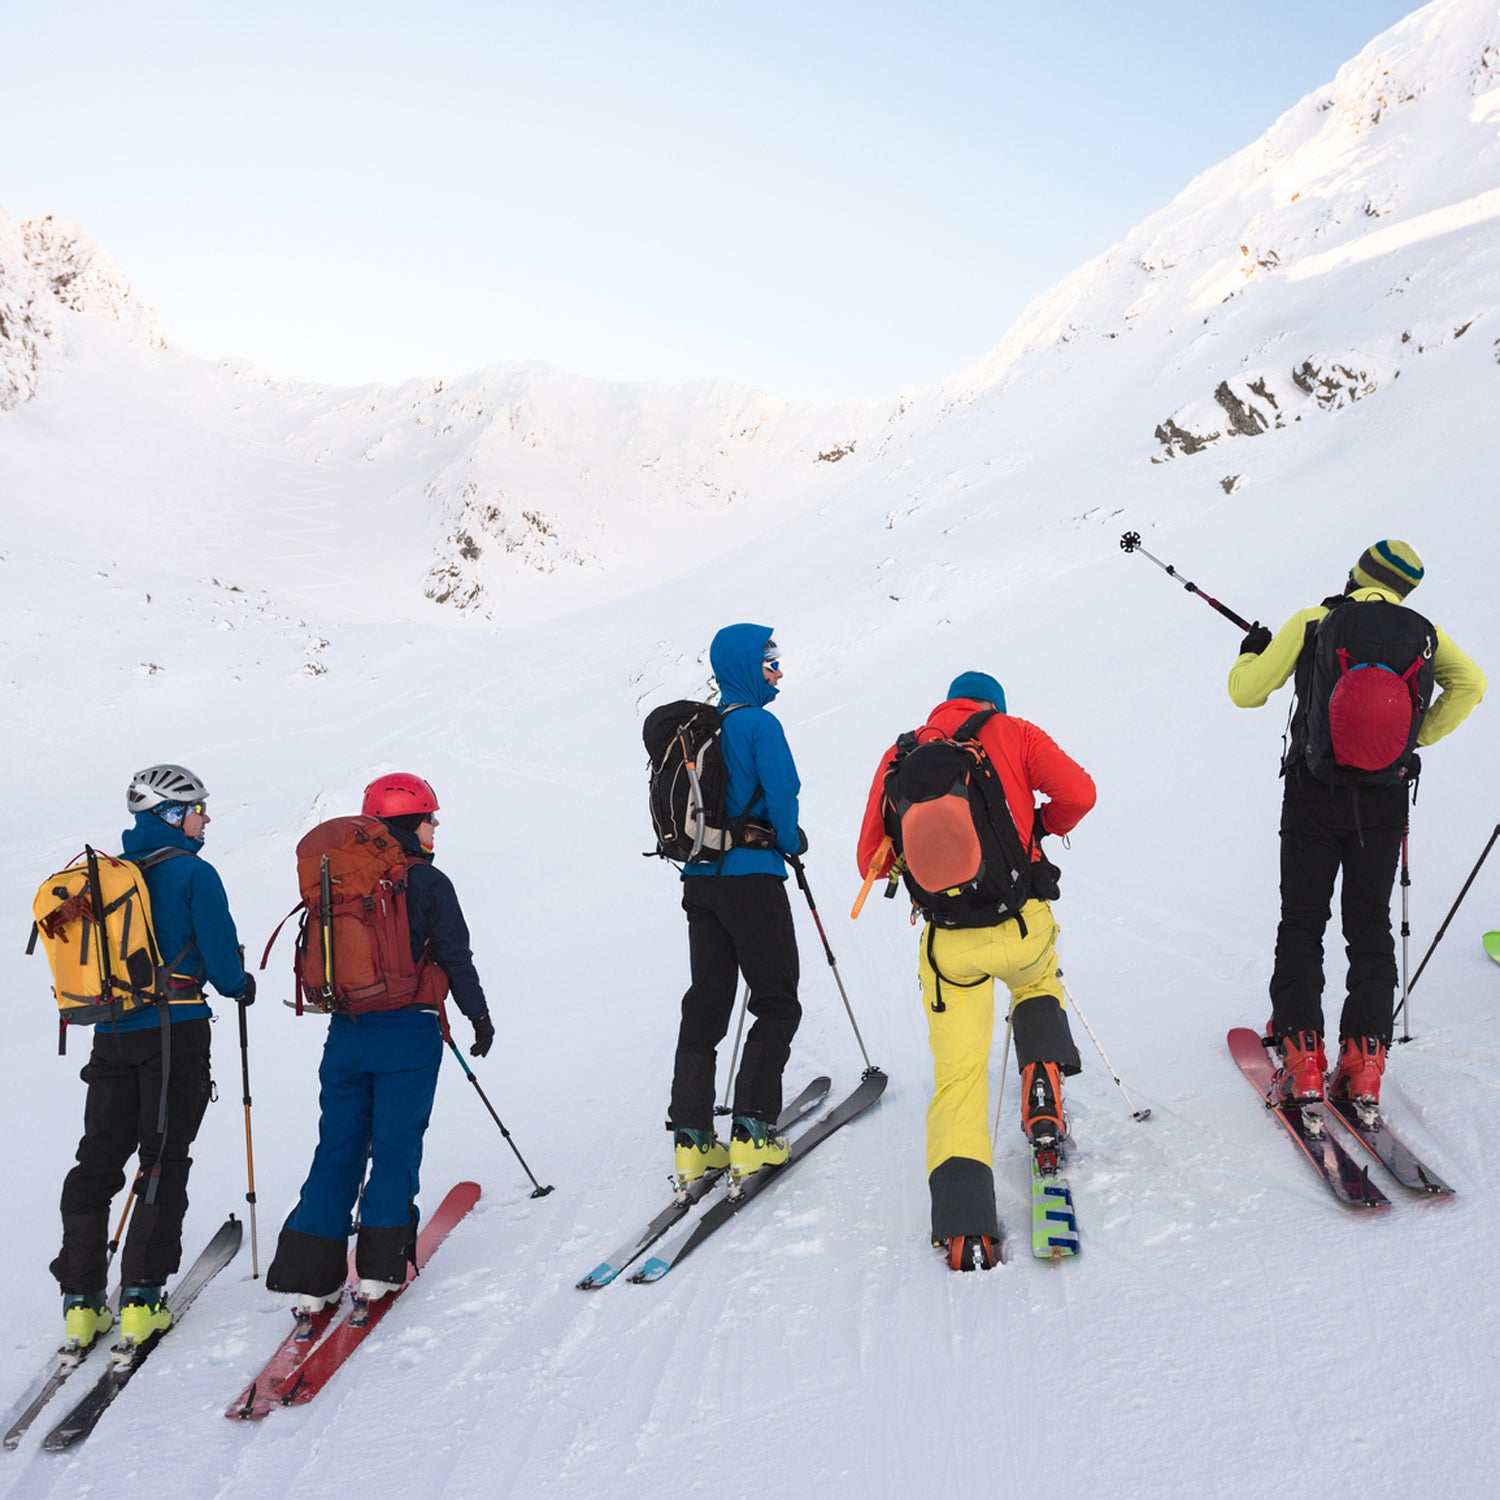 tellen einde Schande Our Favorite Men's Ski Pants for All Types of Snow